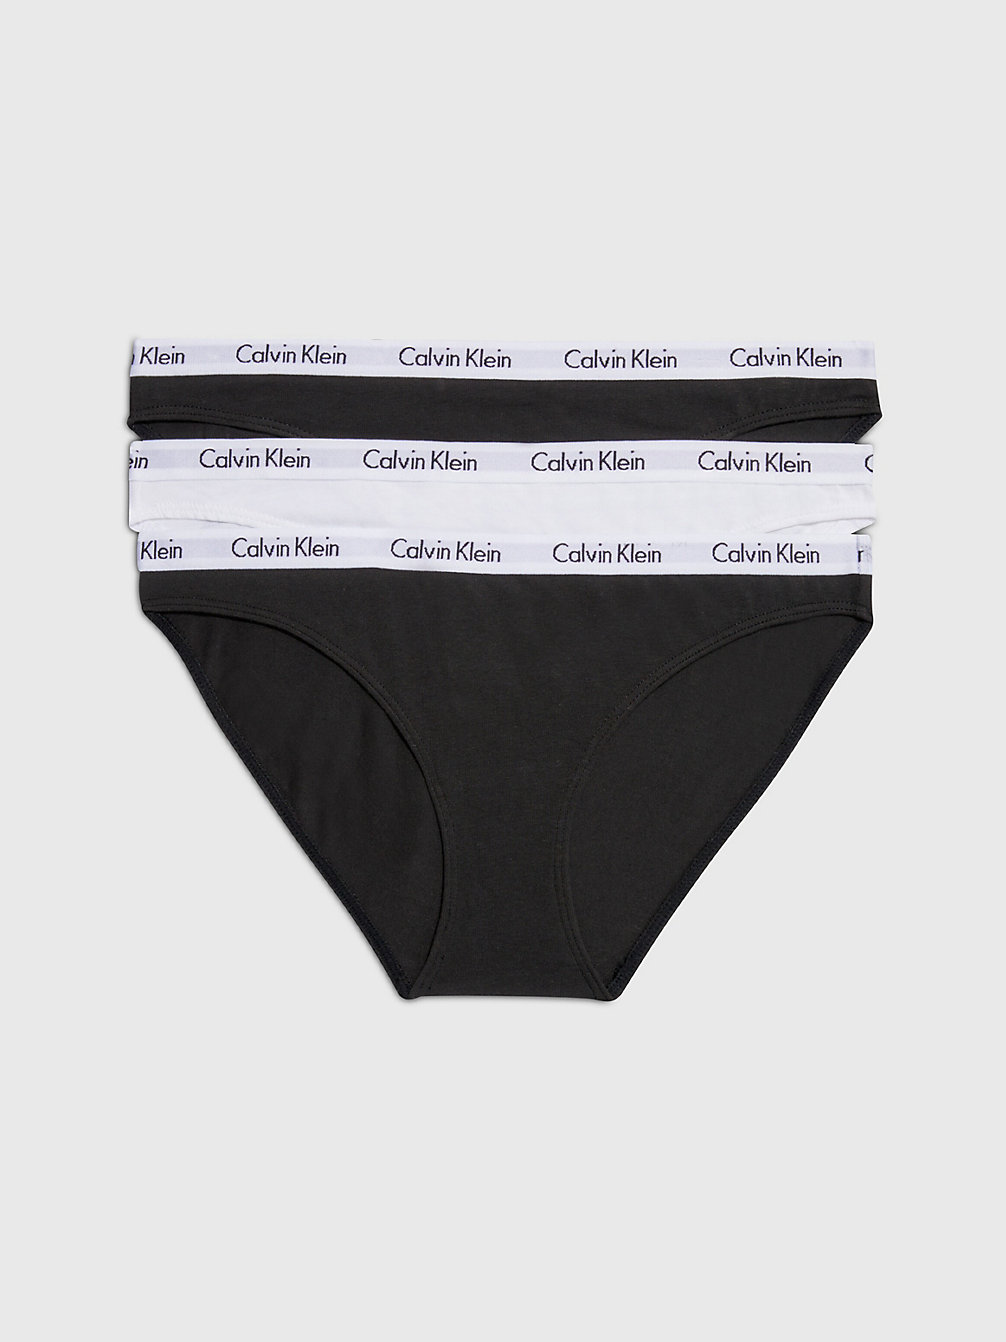 BLACK/WHITE/BLACK Lot De 3 Culottes - Carousel undefined femmes Calvin Klein